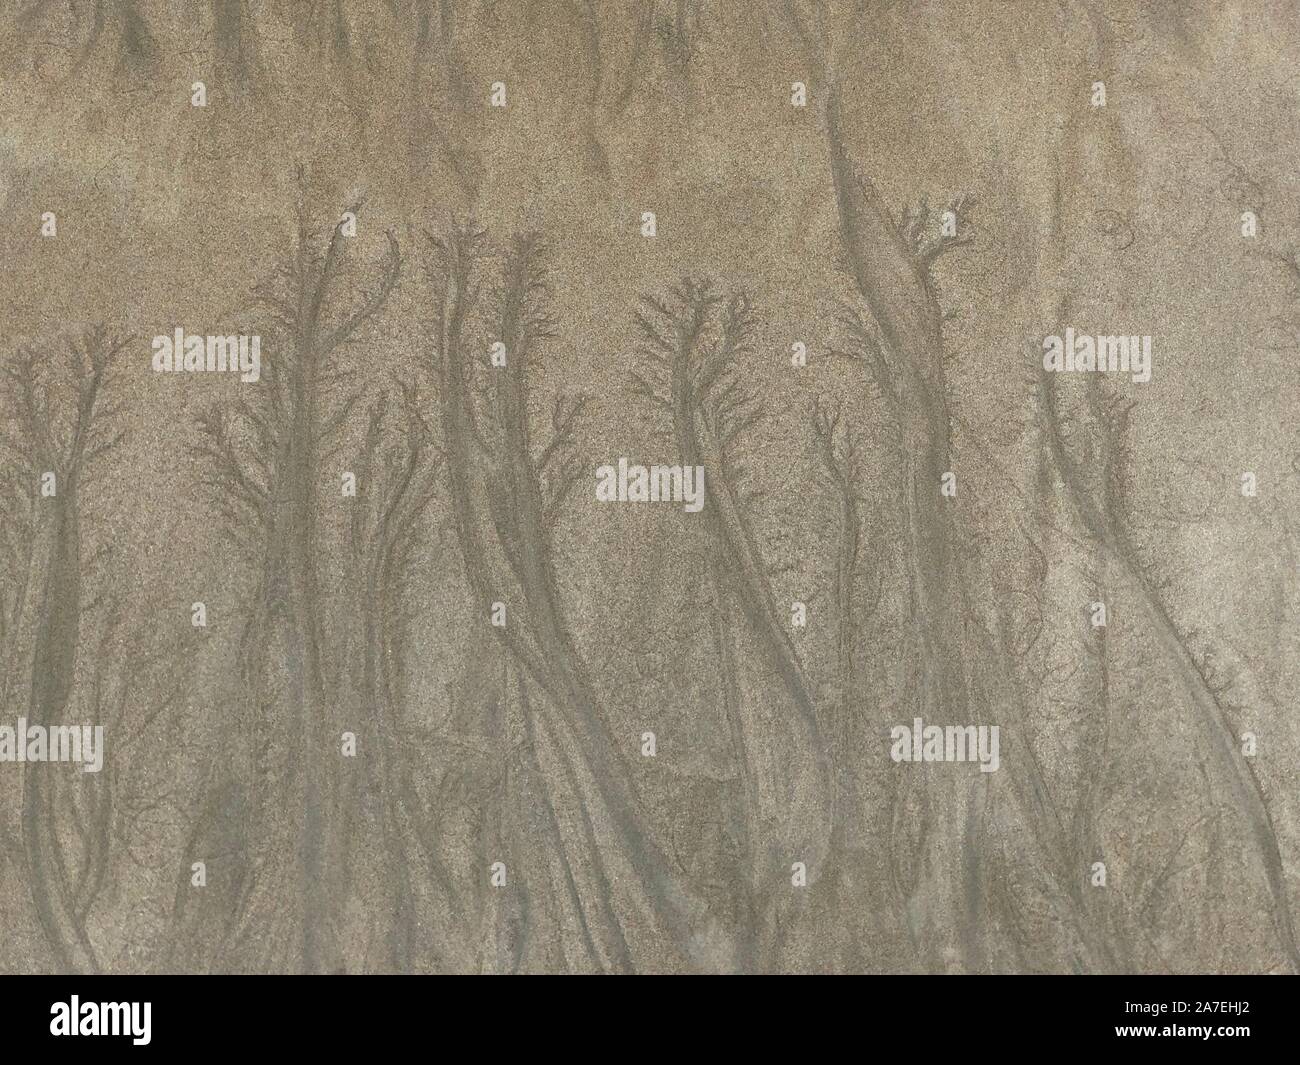 texture on the beach sand Stock Photo